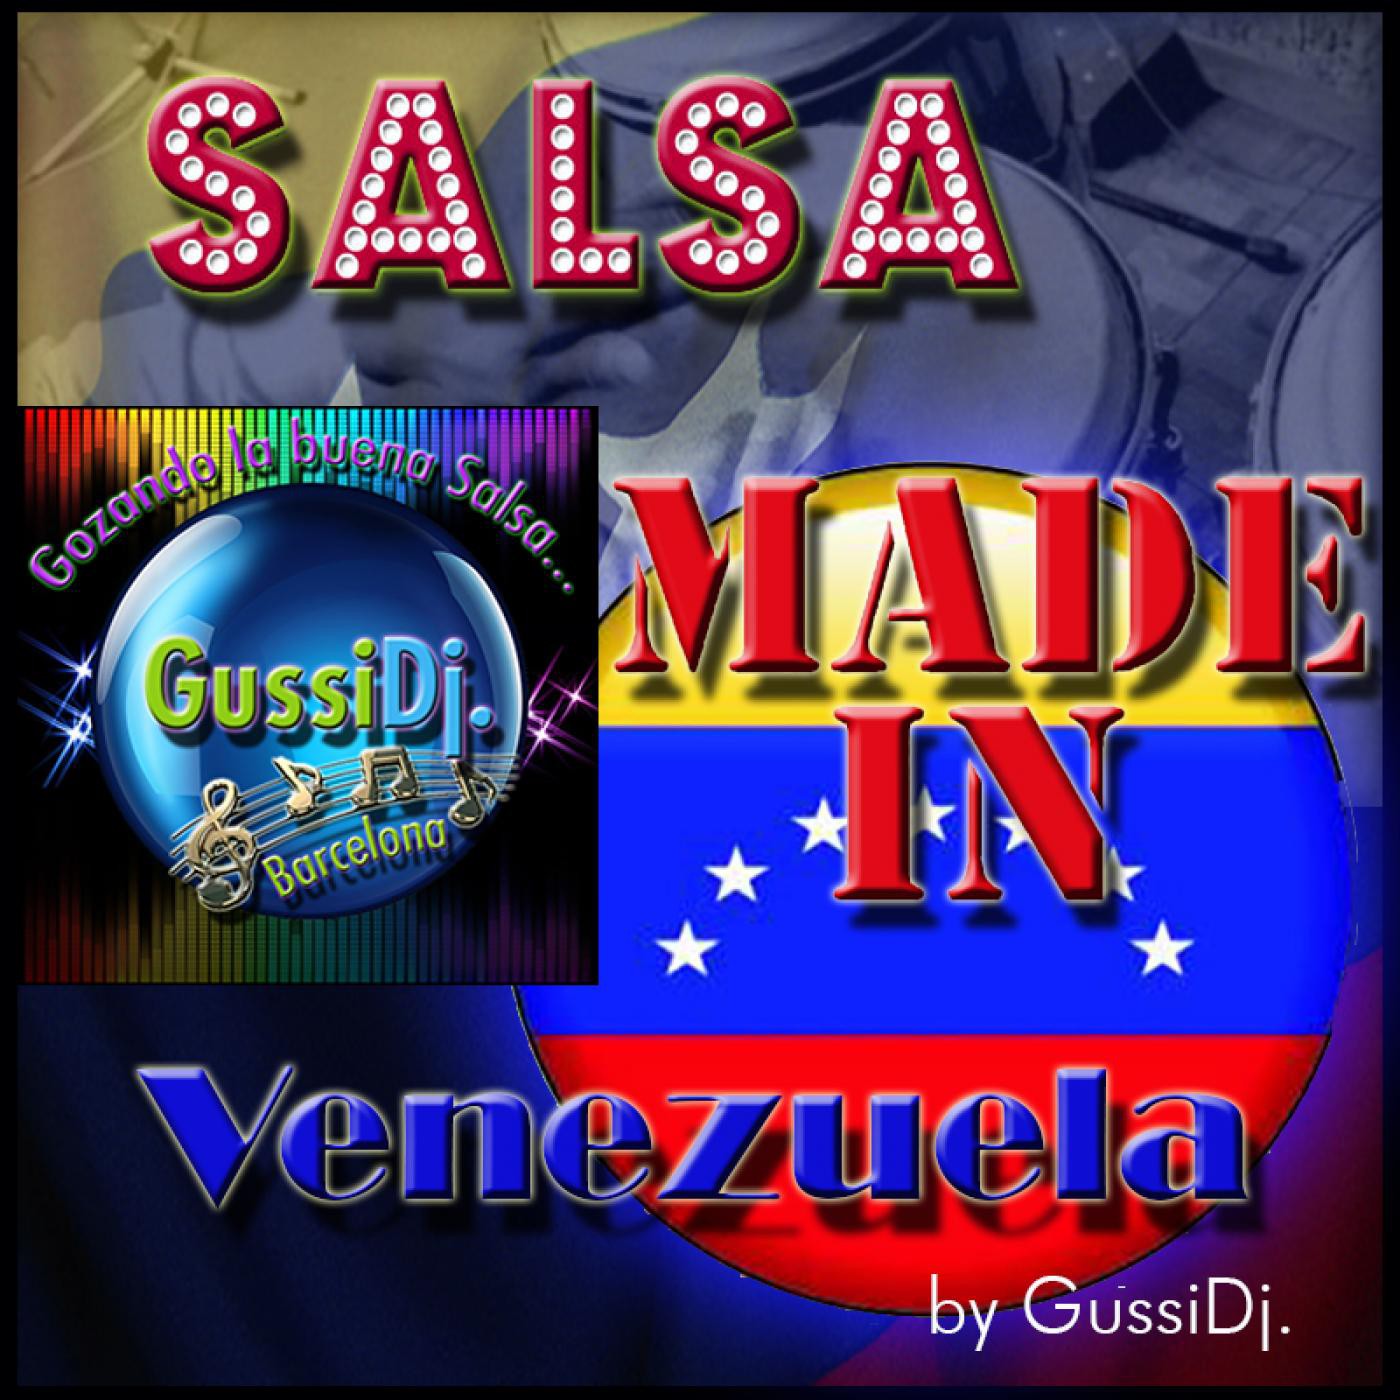 Salsa made in Venezuela